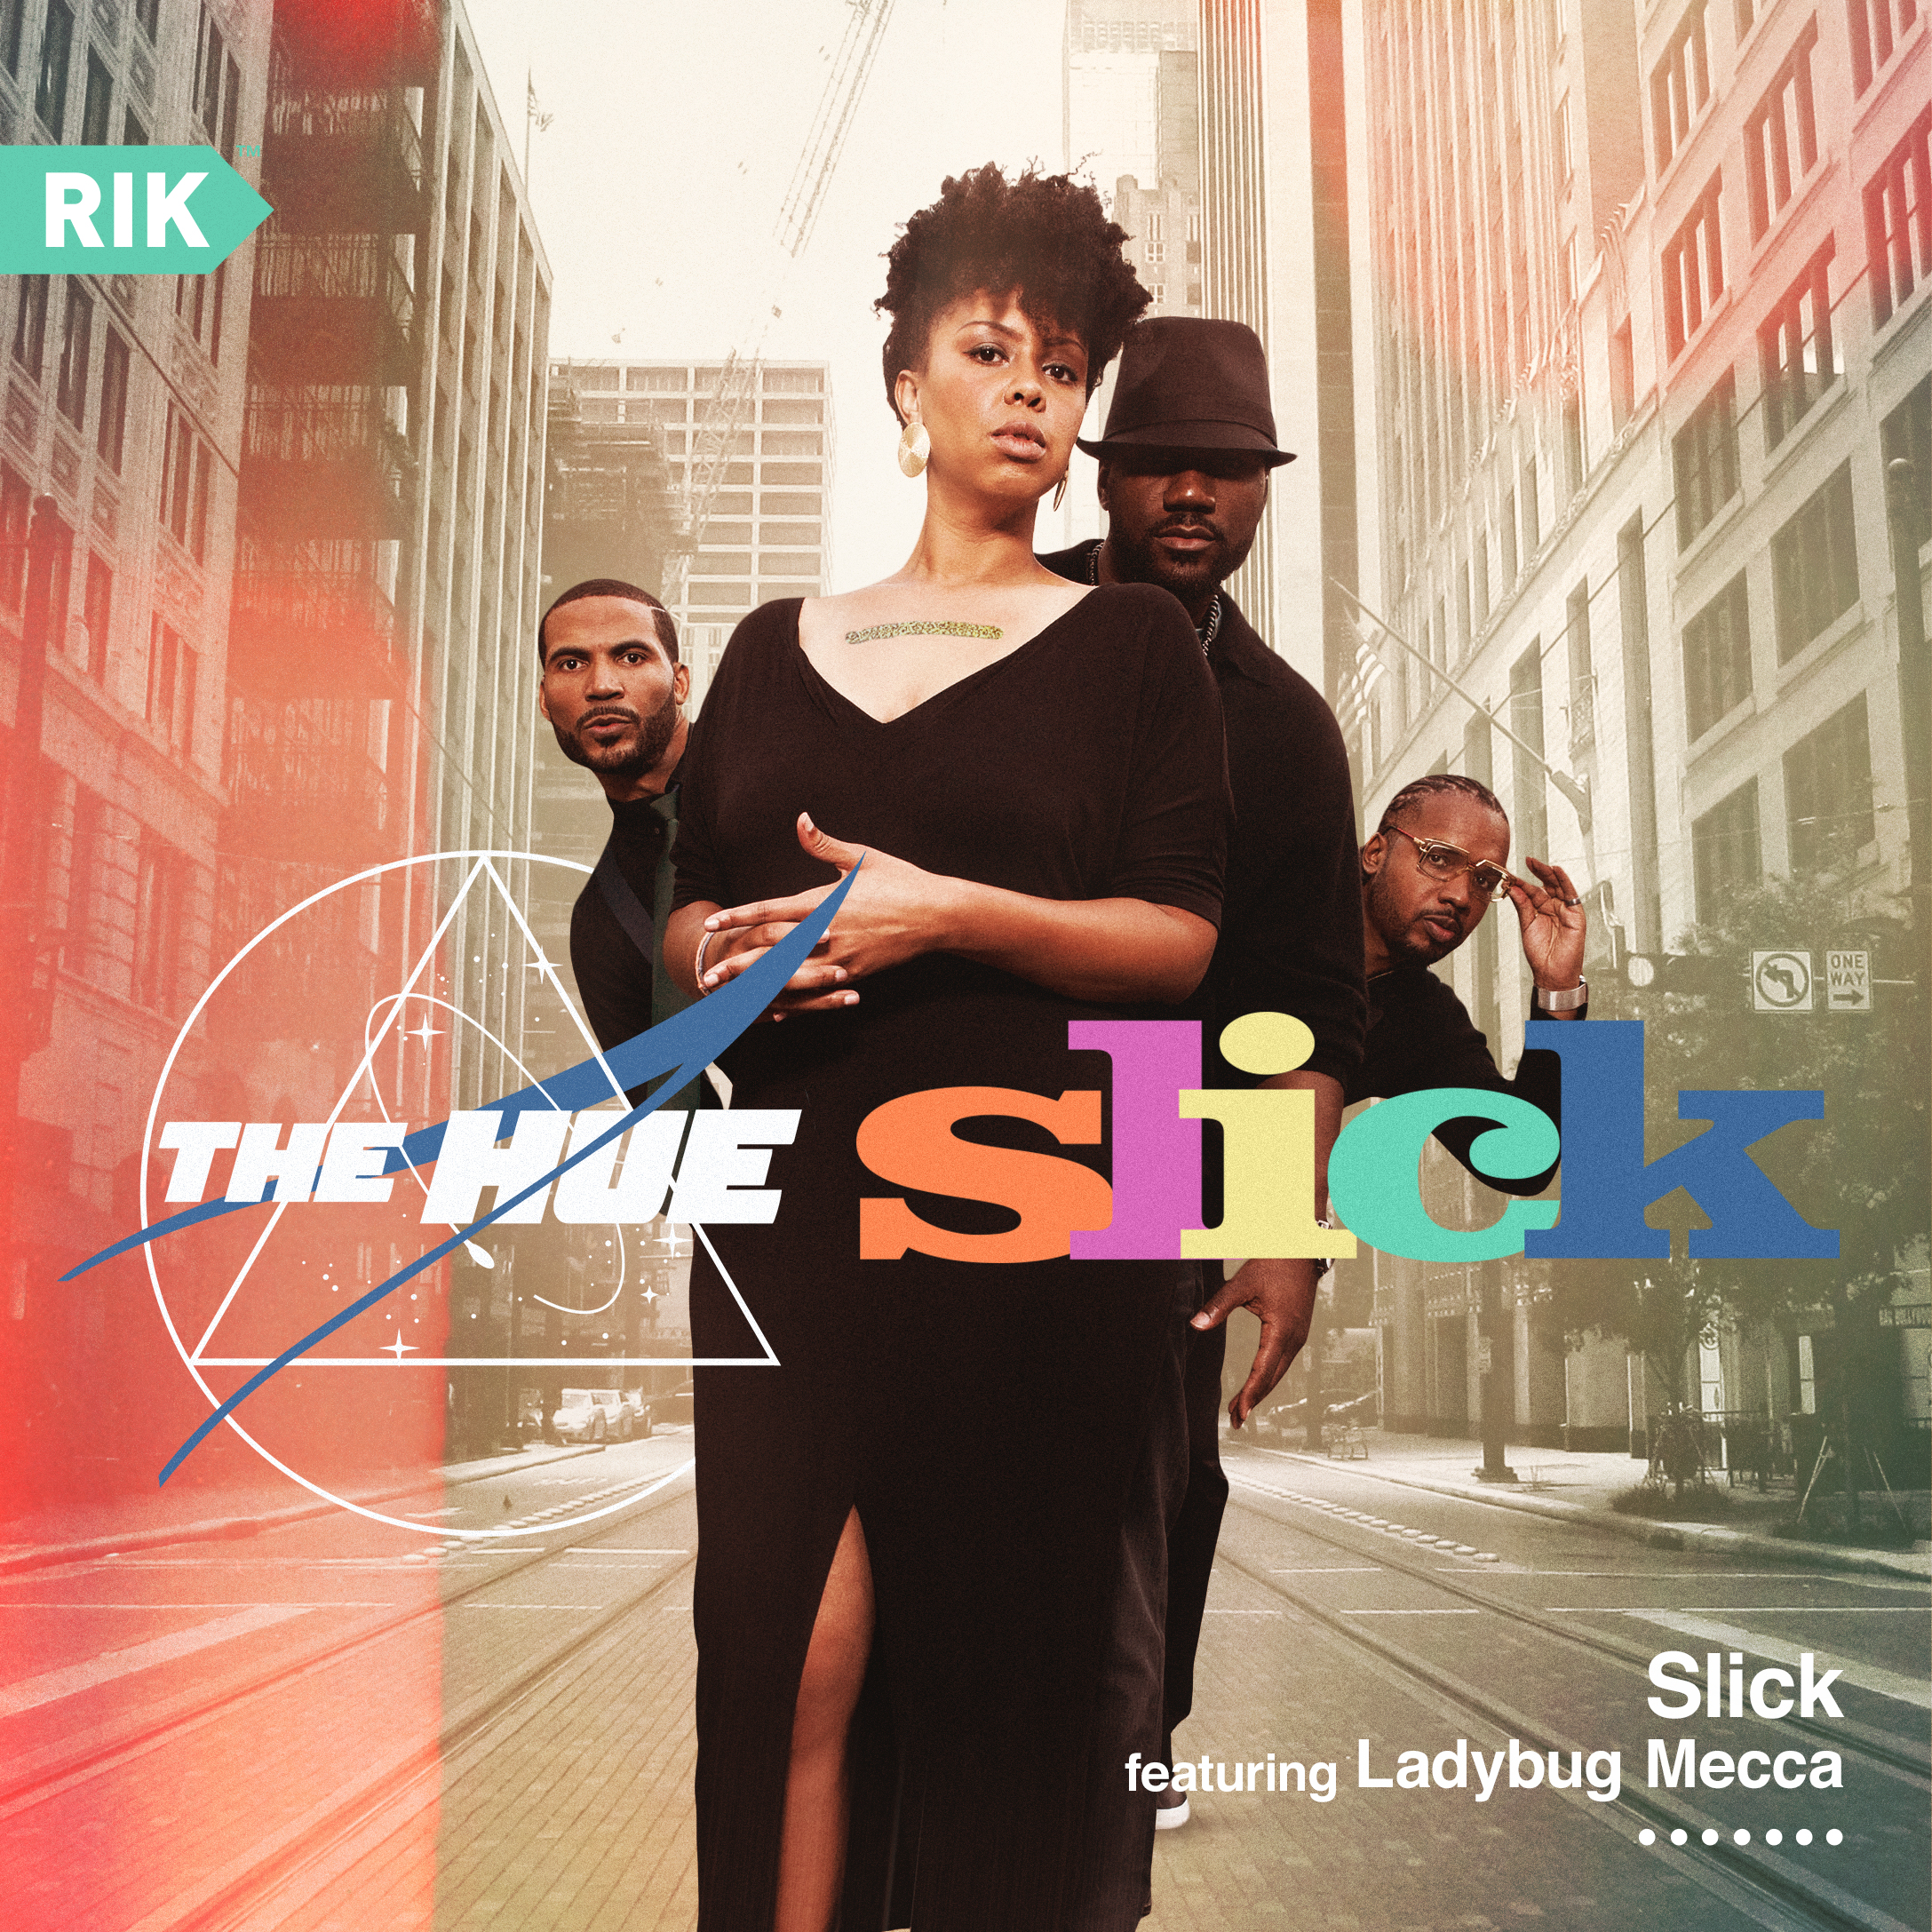 The Hue — “Slick” featuring Ladybug Mecca